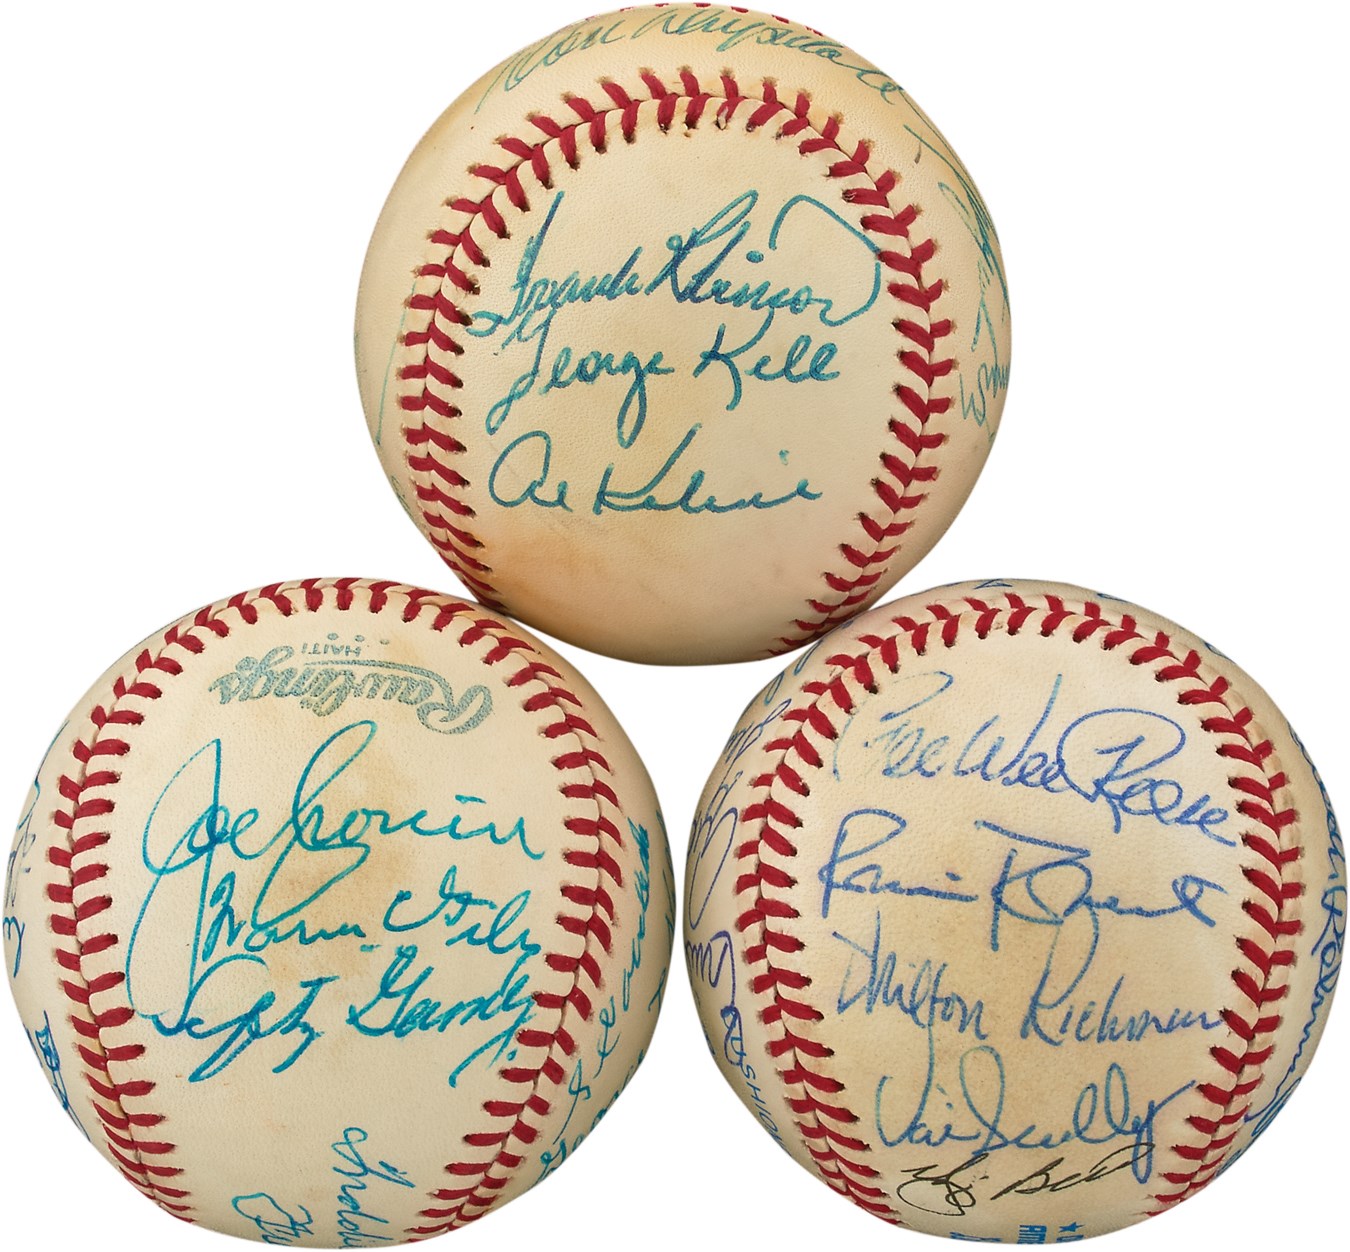 - Three Hall of Famers Signed Baseballs